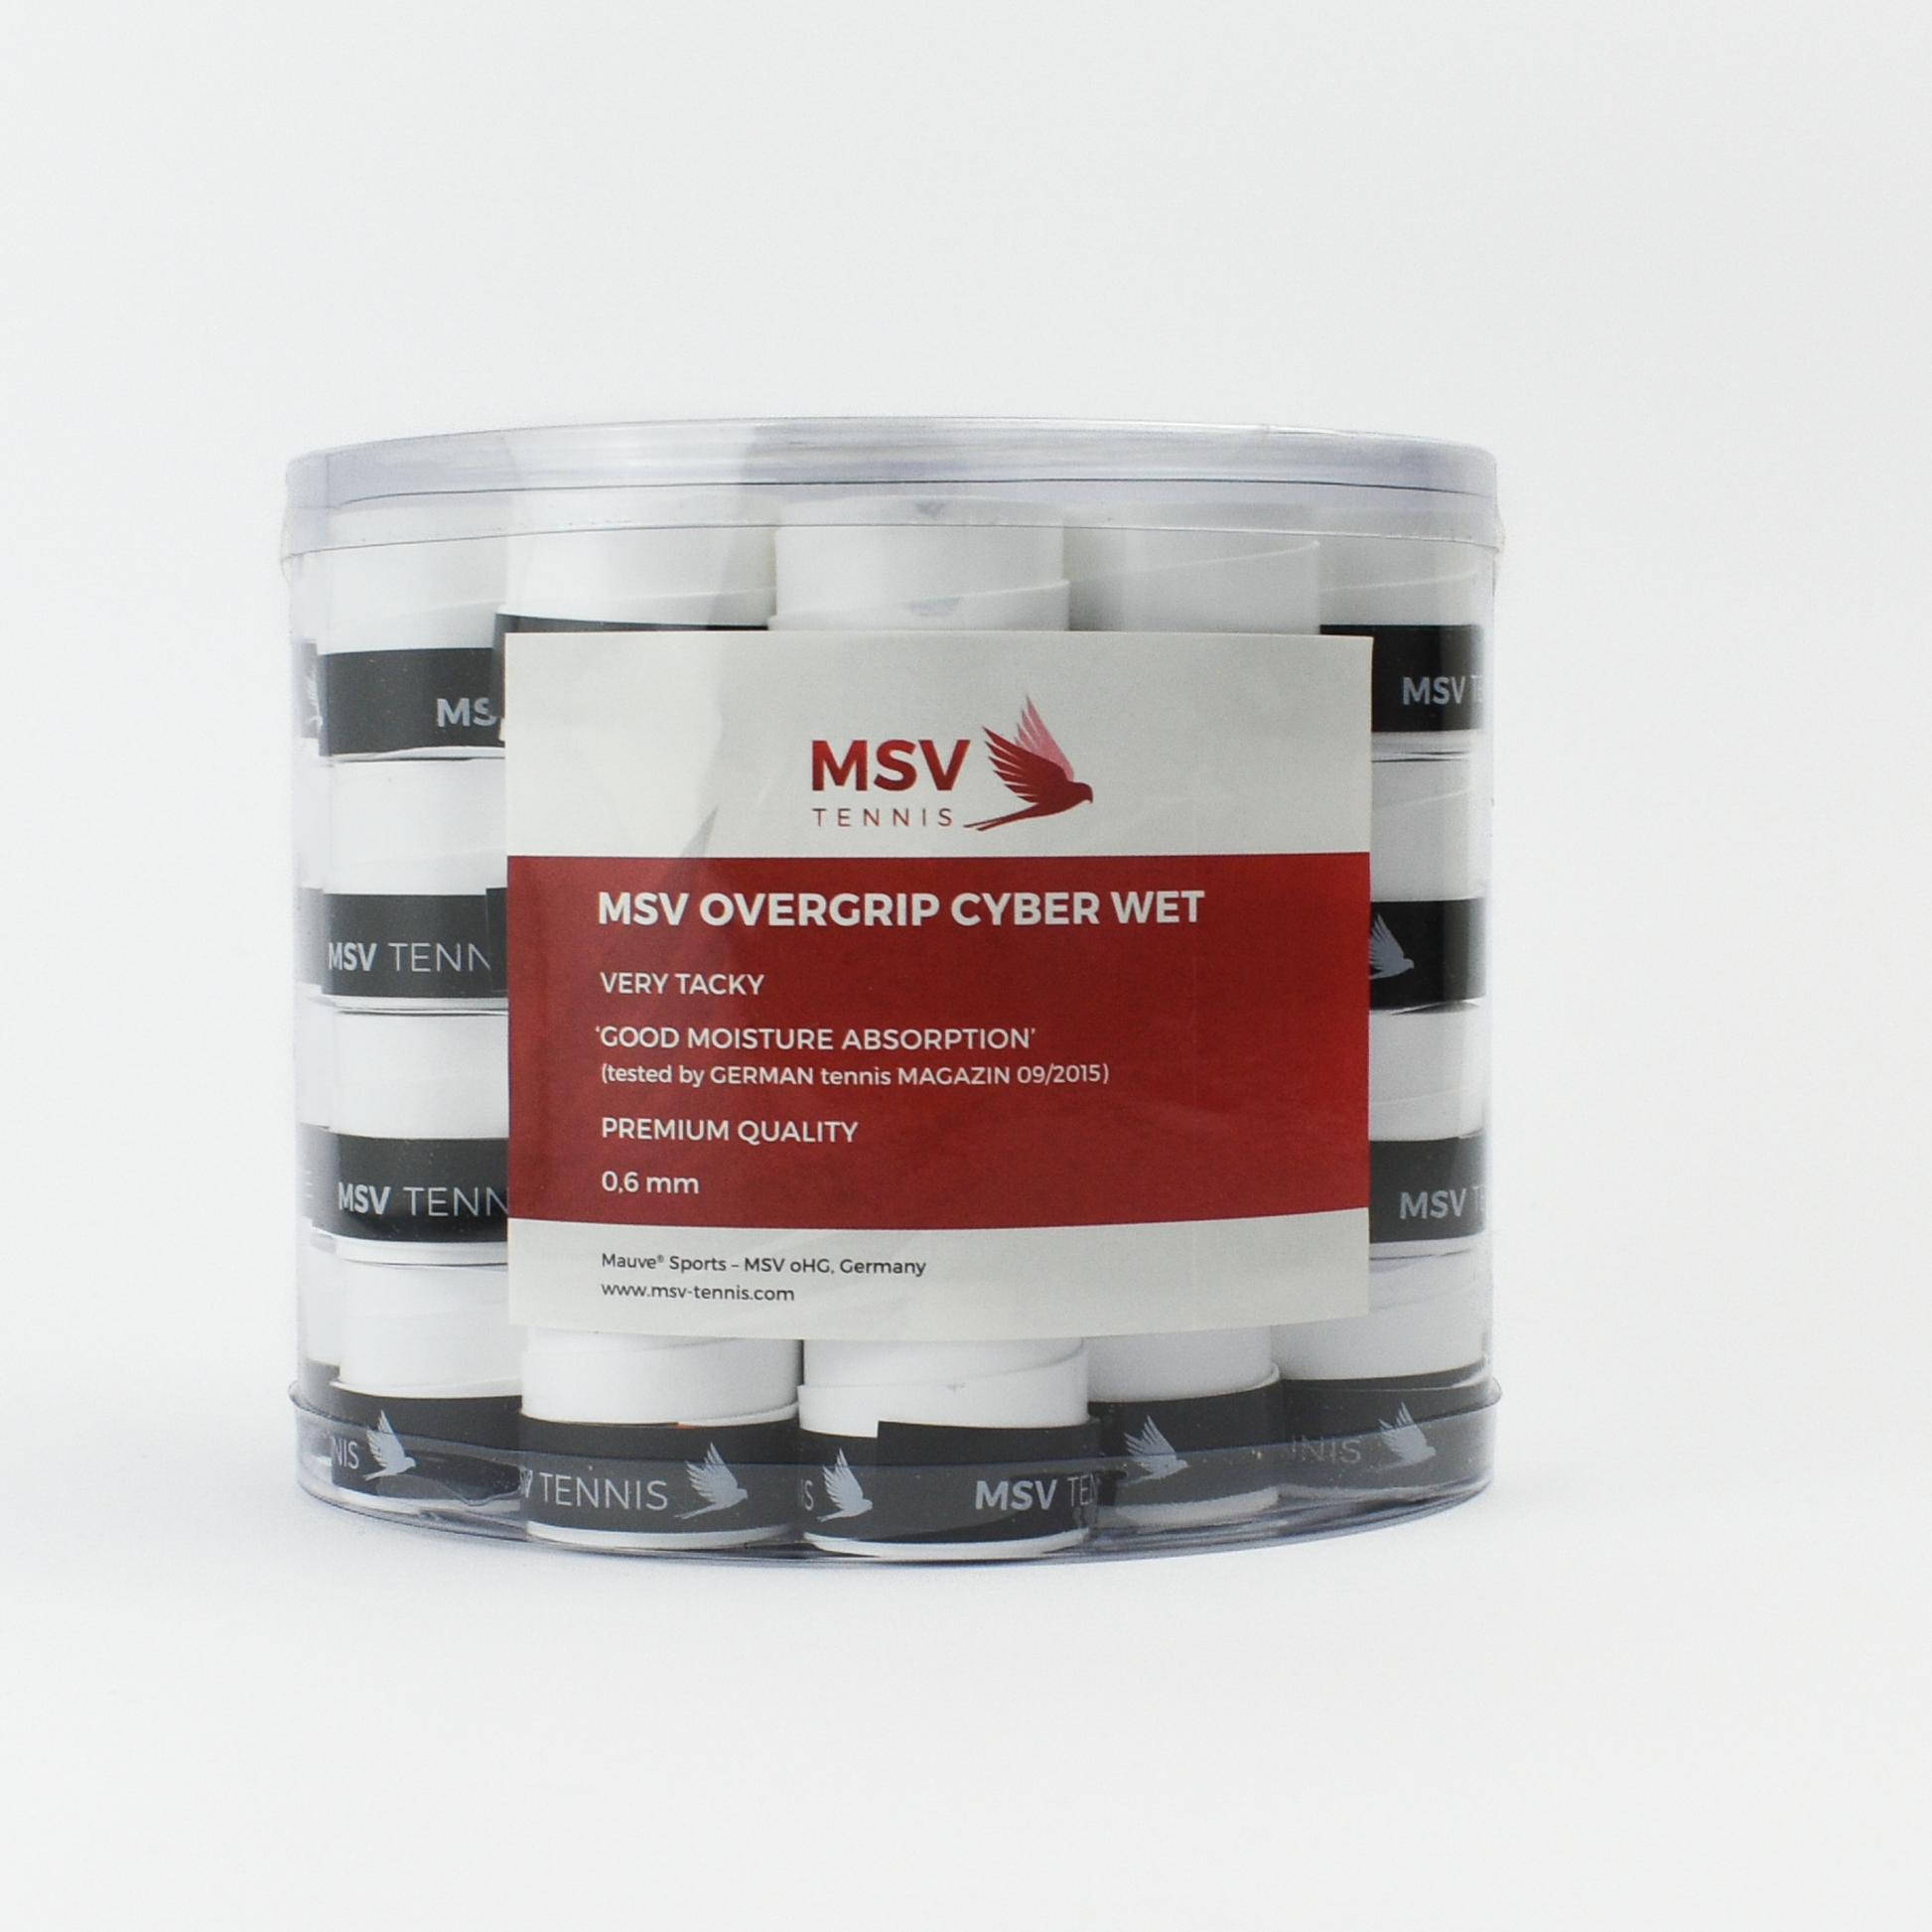 msv-overgrip-cyber-wet-white-60-pack